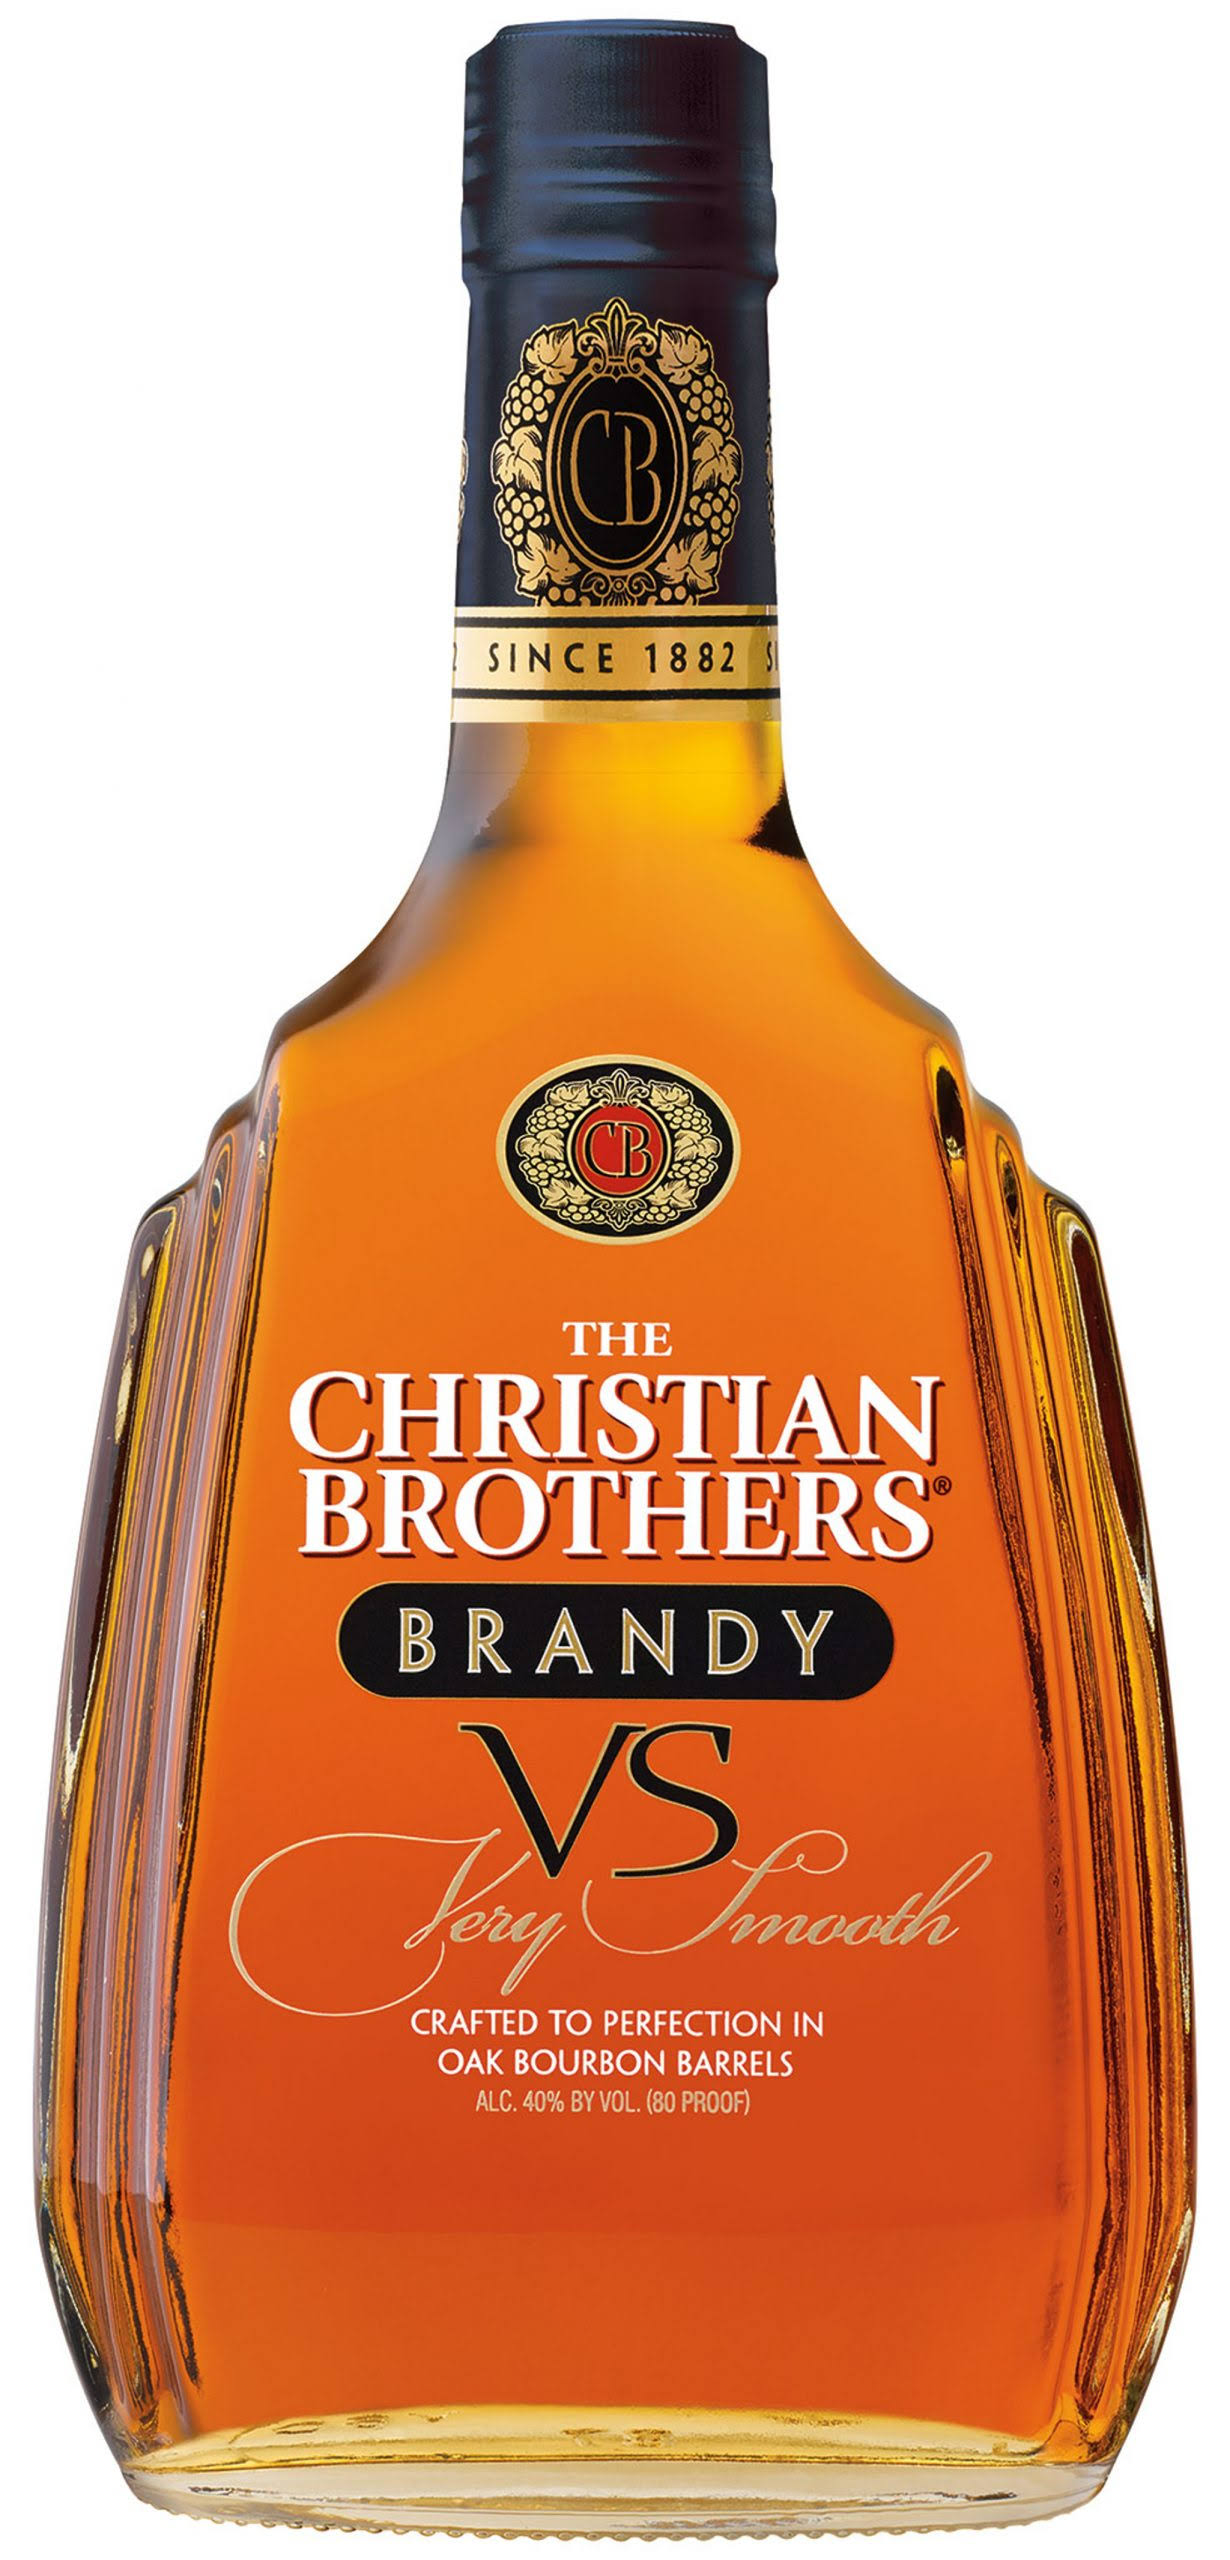 Christian Brothers Brandy, VS, Very Smooth - 750 ml